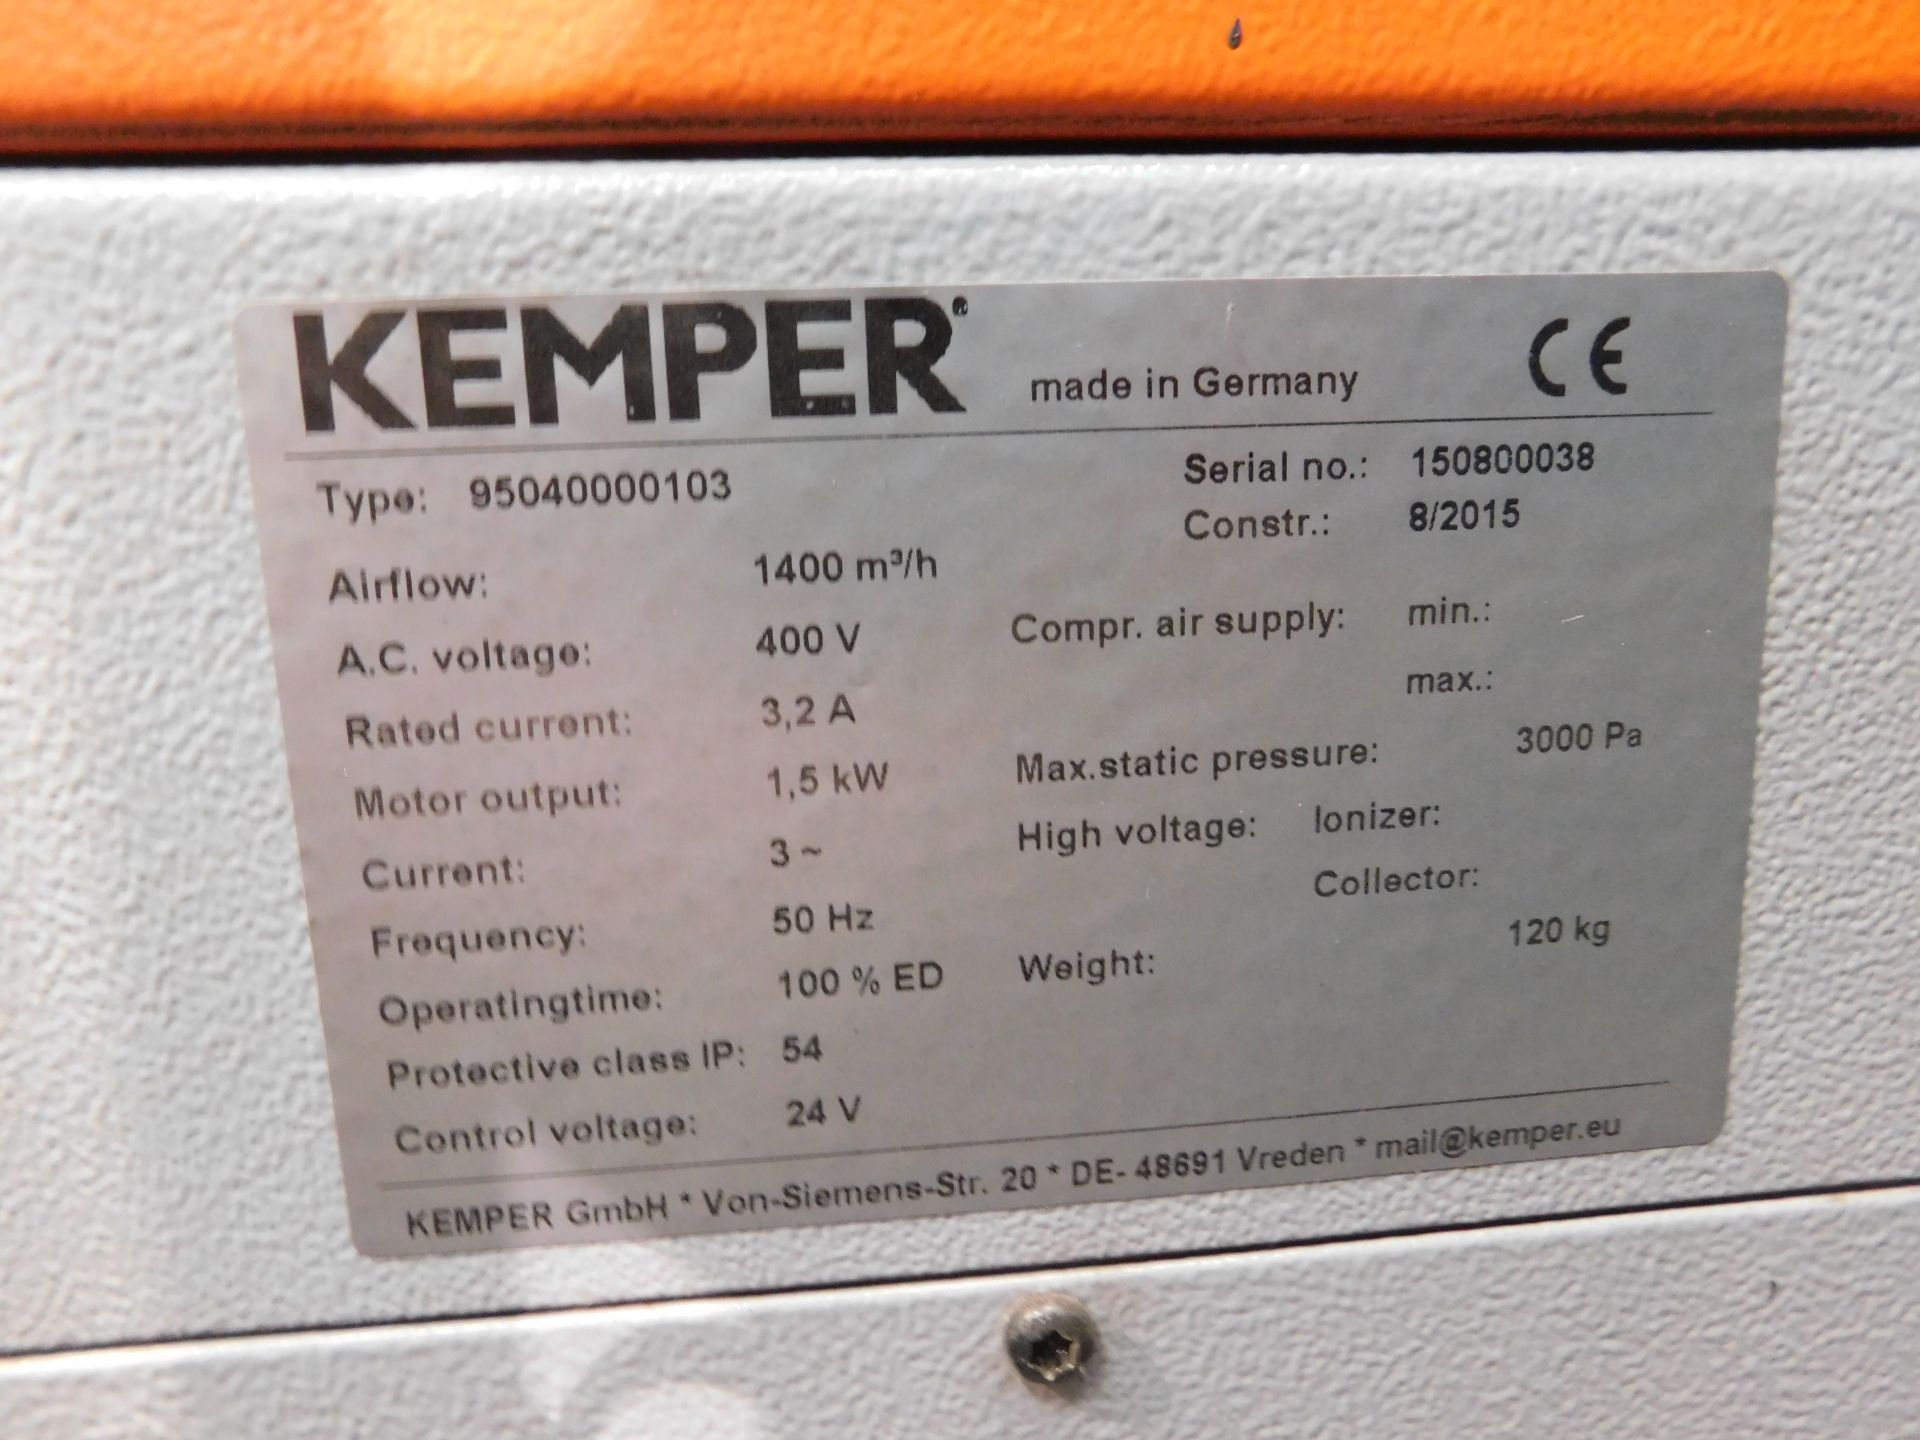 Kemper Welding Table & Filter Unit (2015), serial number 150800038 - Image 3 of 4